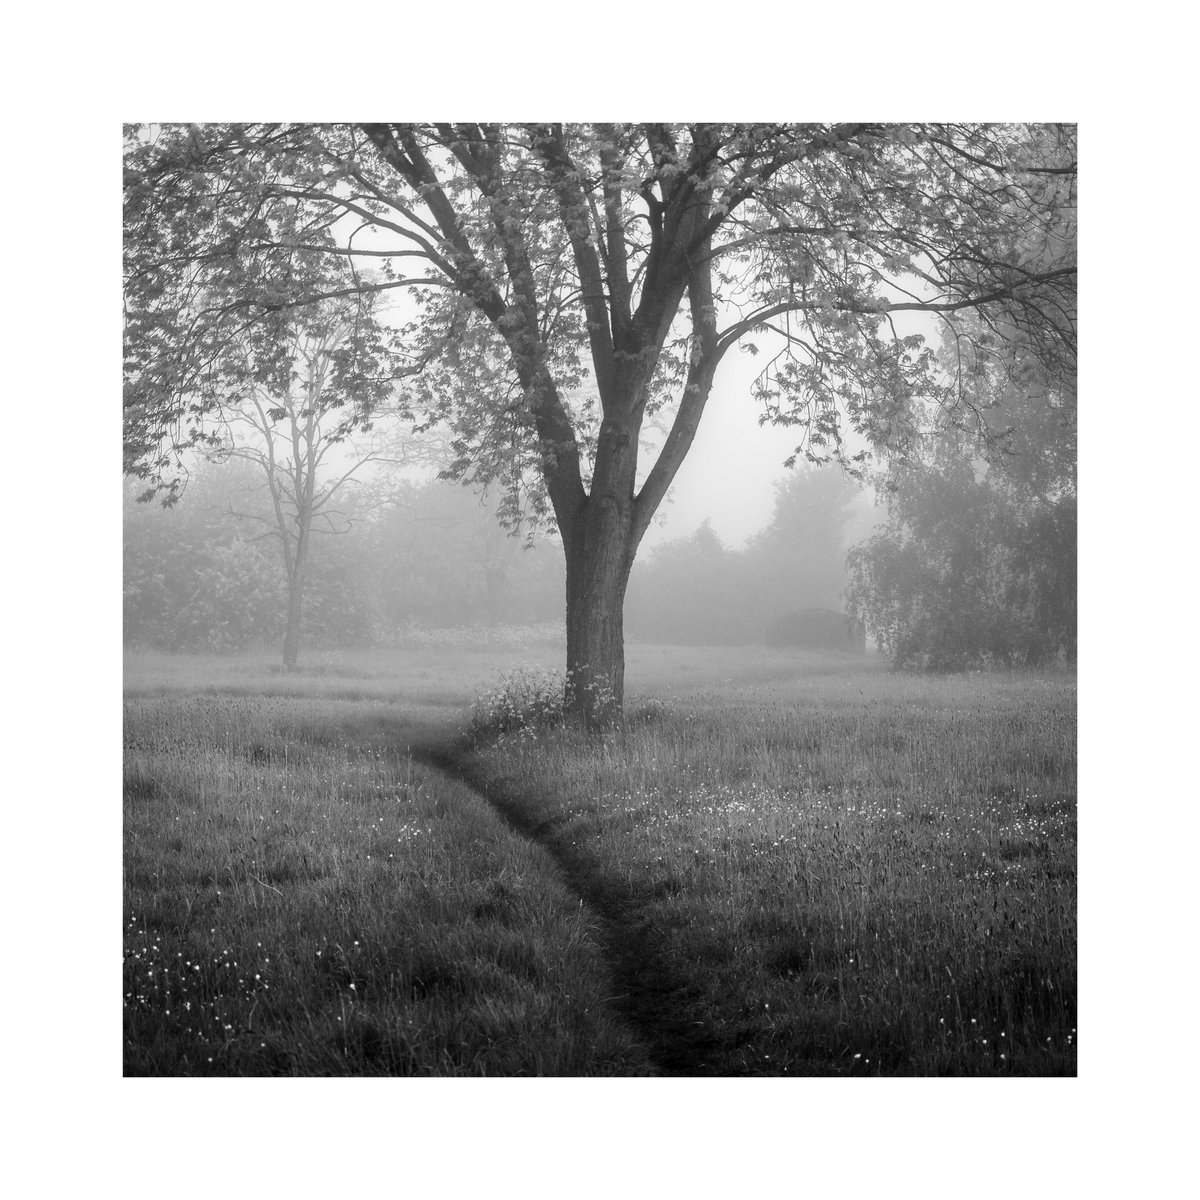 Path to Tree, Buckinghamshire. 

#photography #monochrome #bnw